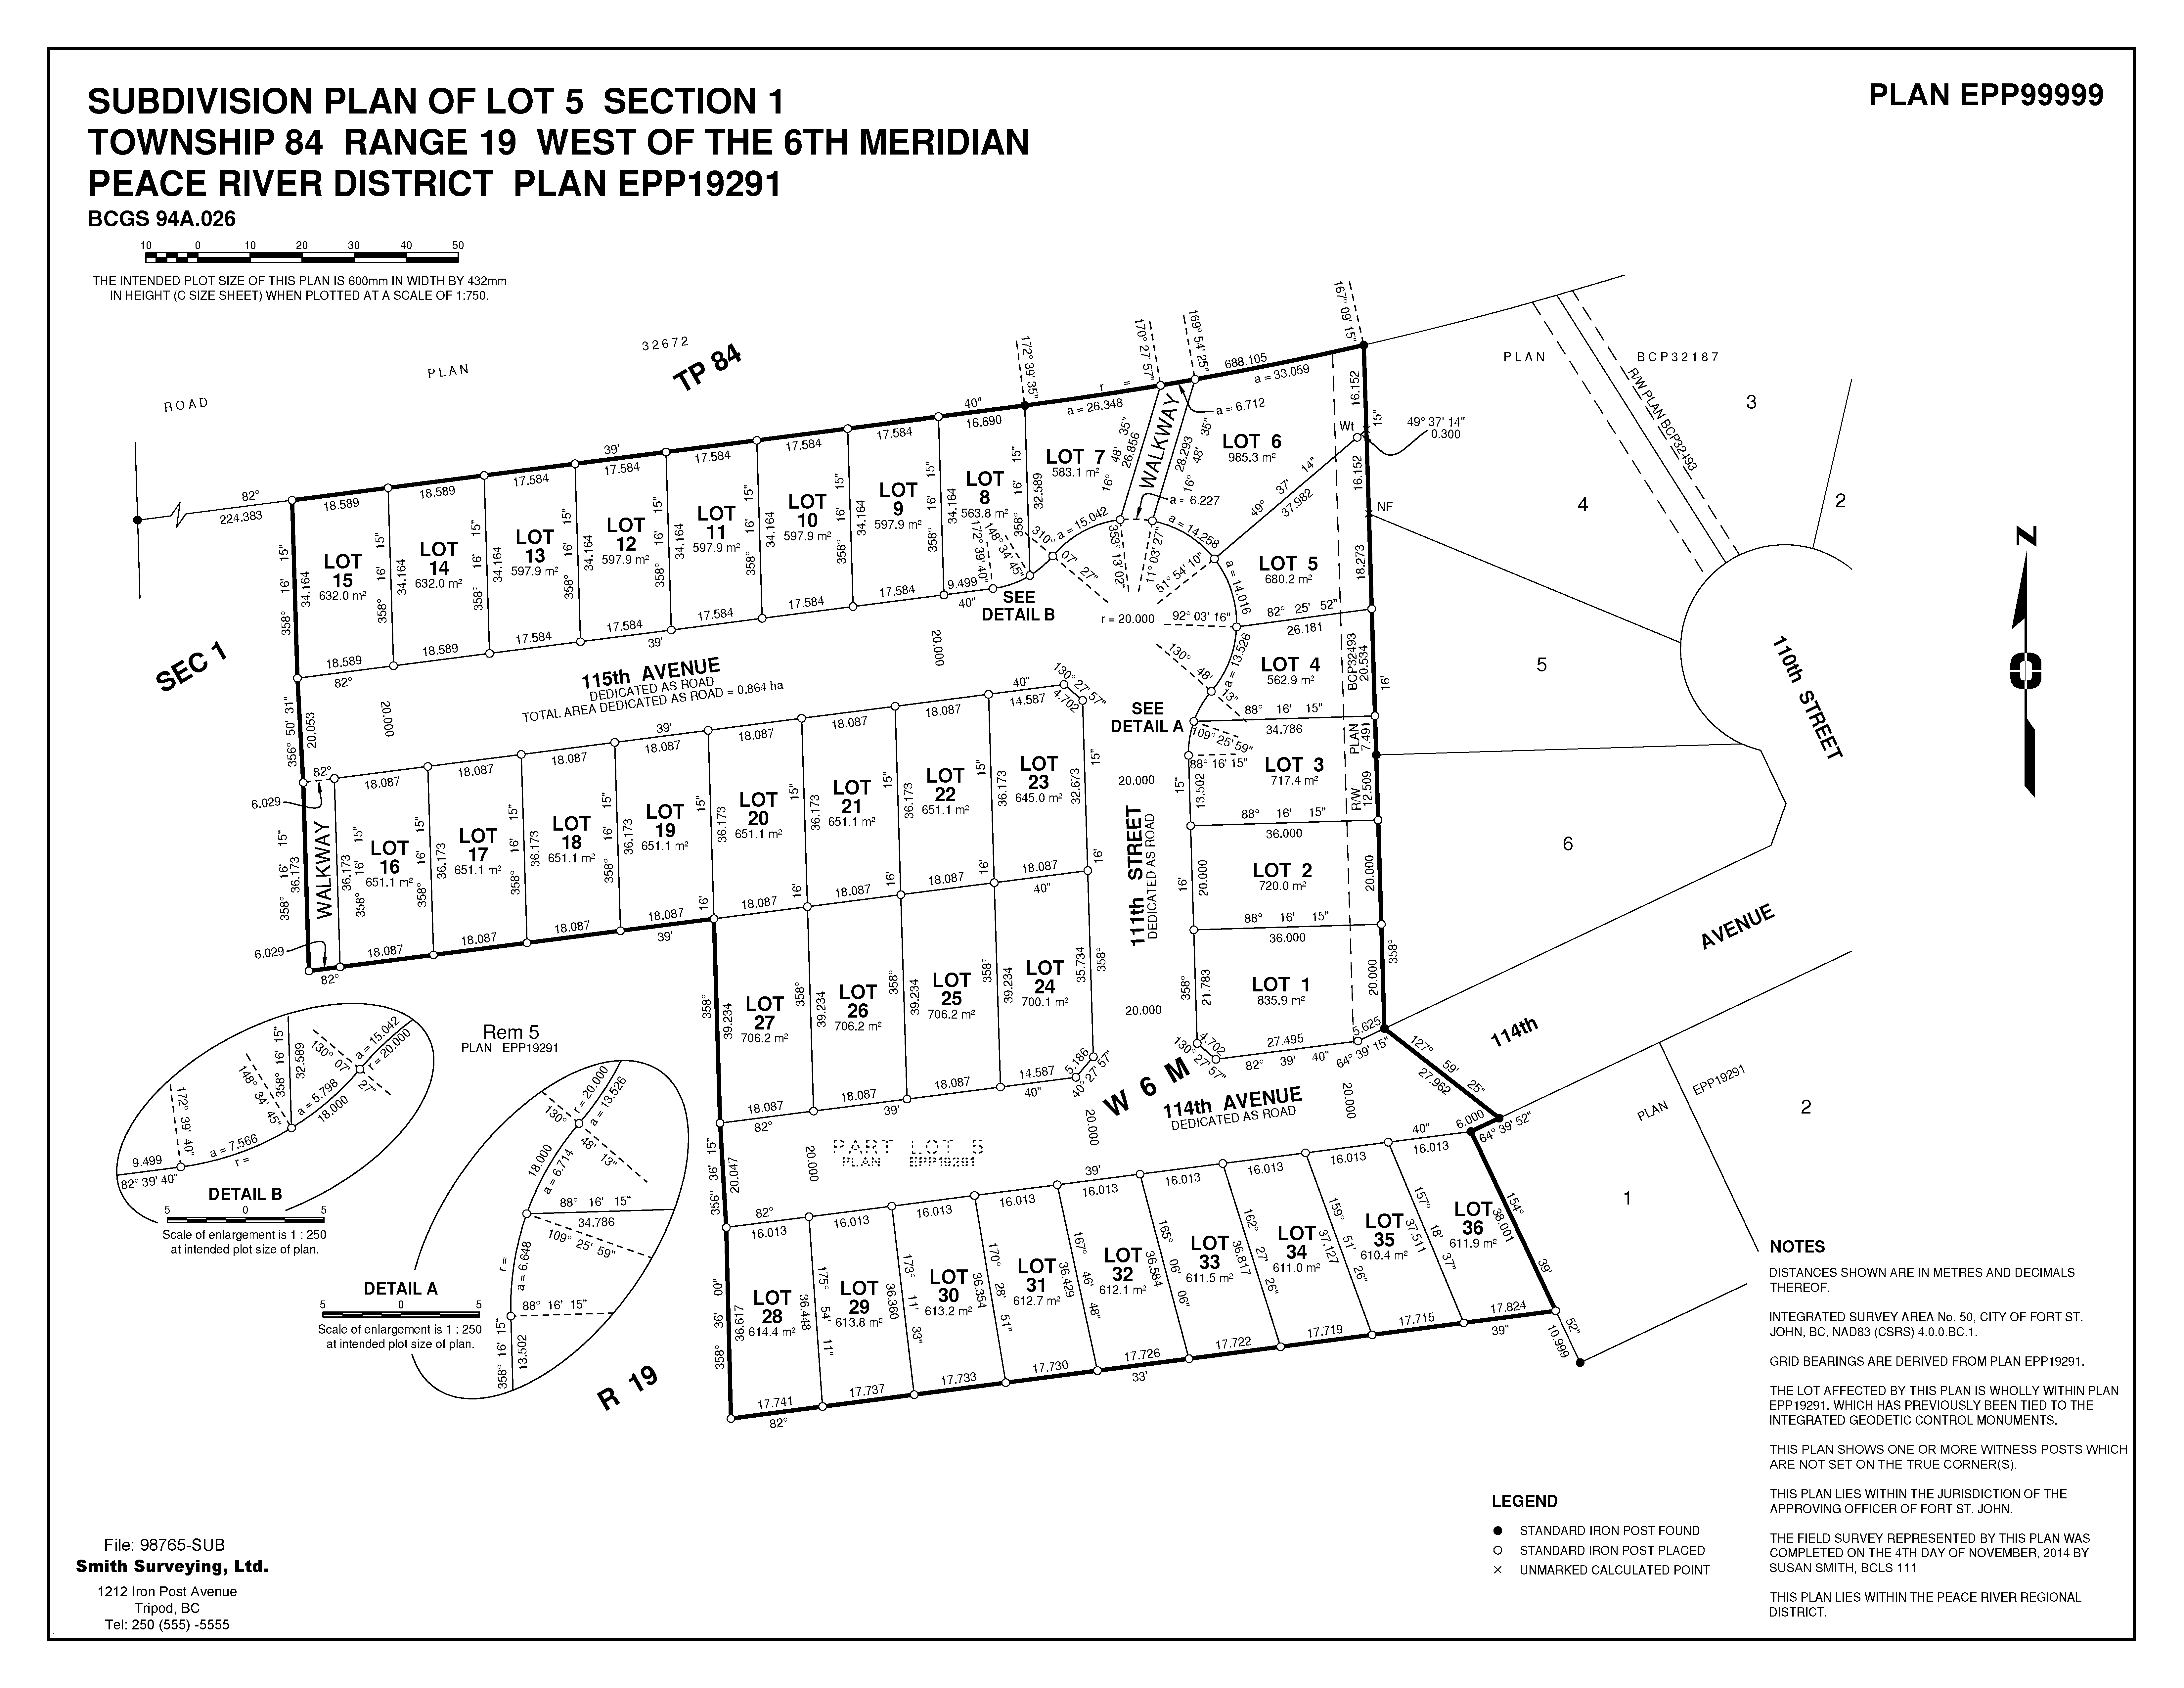 land survey business plan pdf